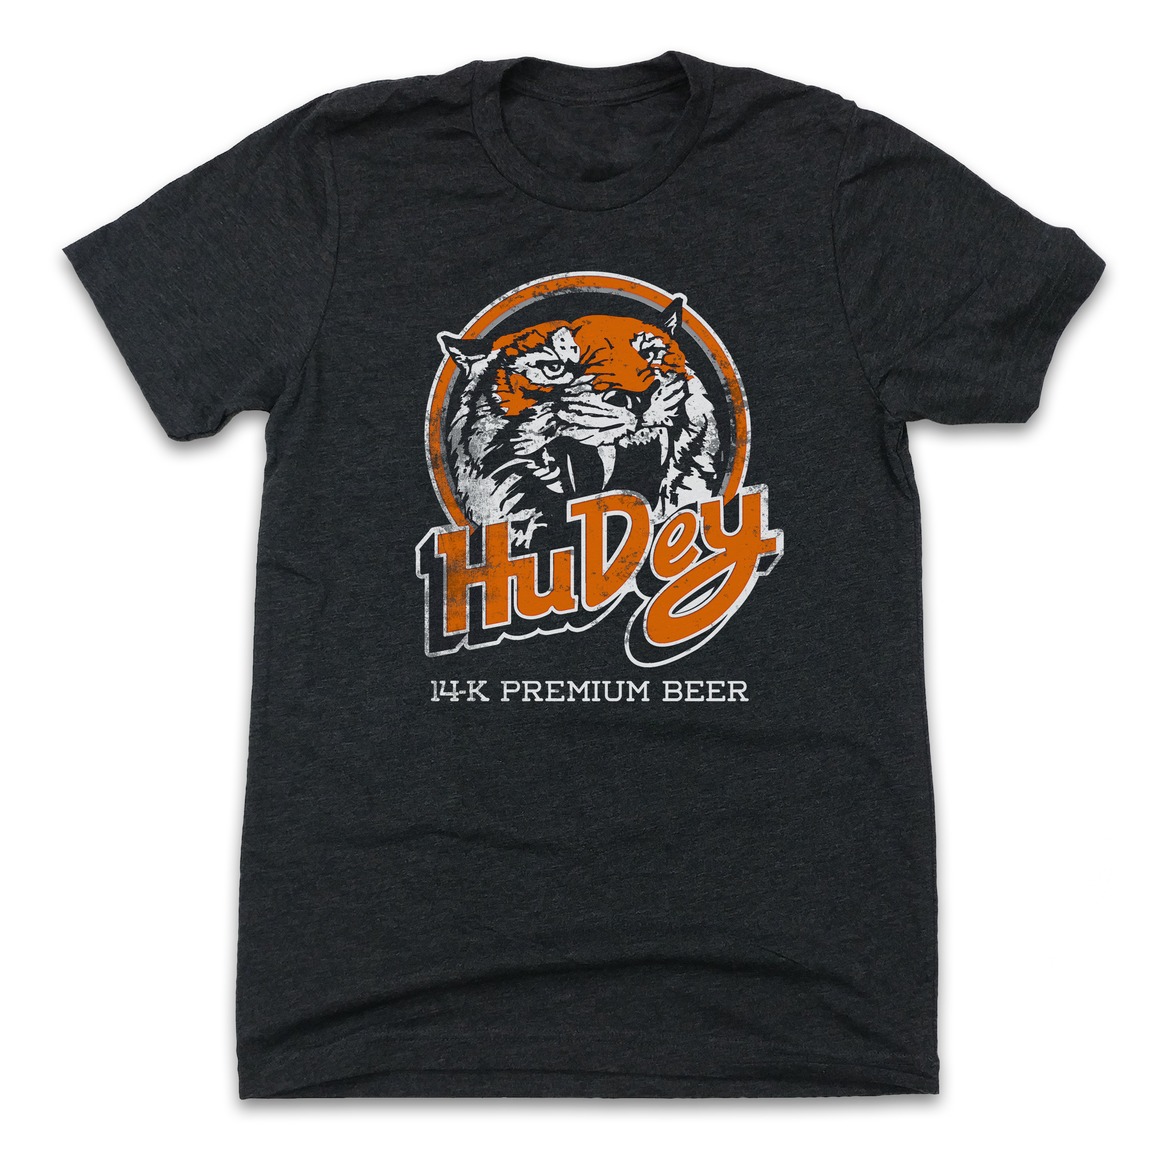 HuDey 14-K Premium Beer - Cincy Shirts